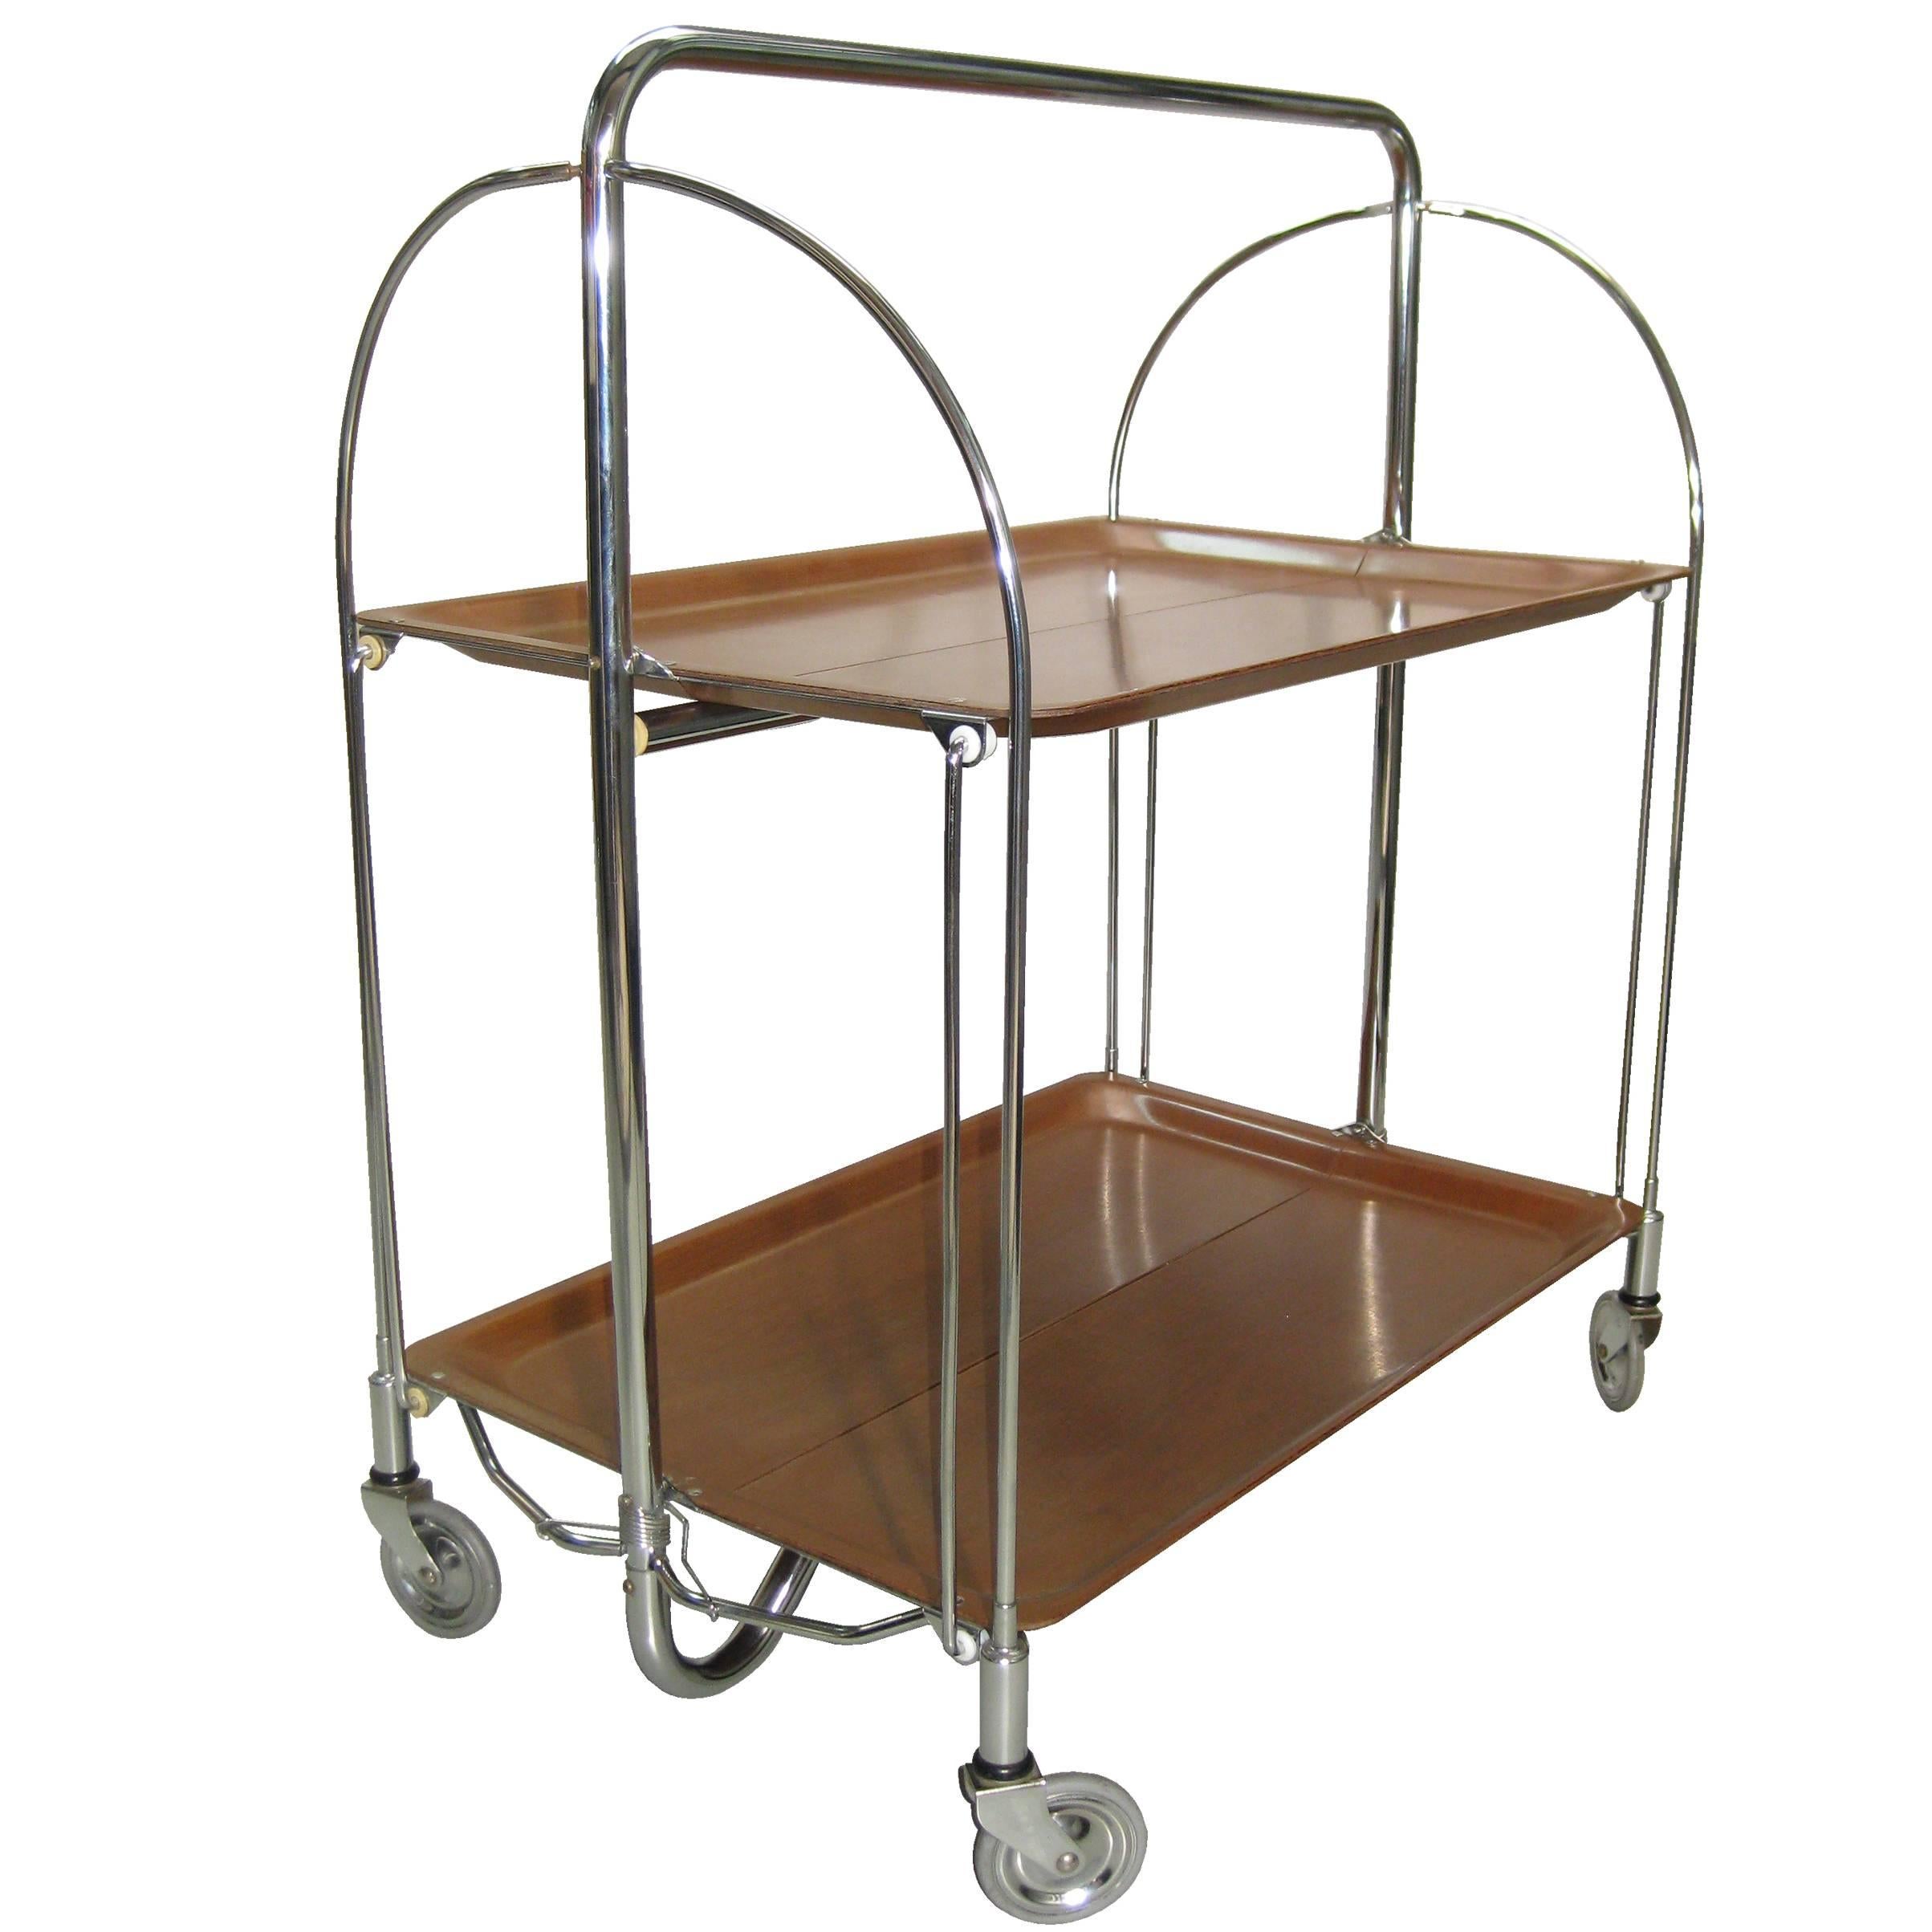 Collapsible "Gerlinol" Tea or Bar Trolley Cart